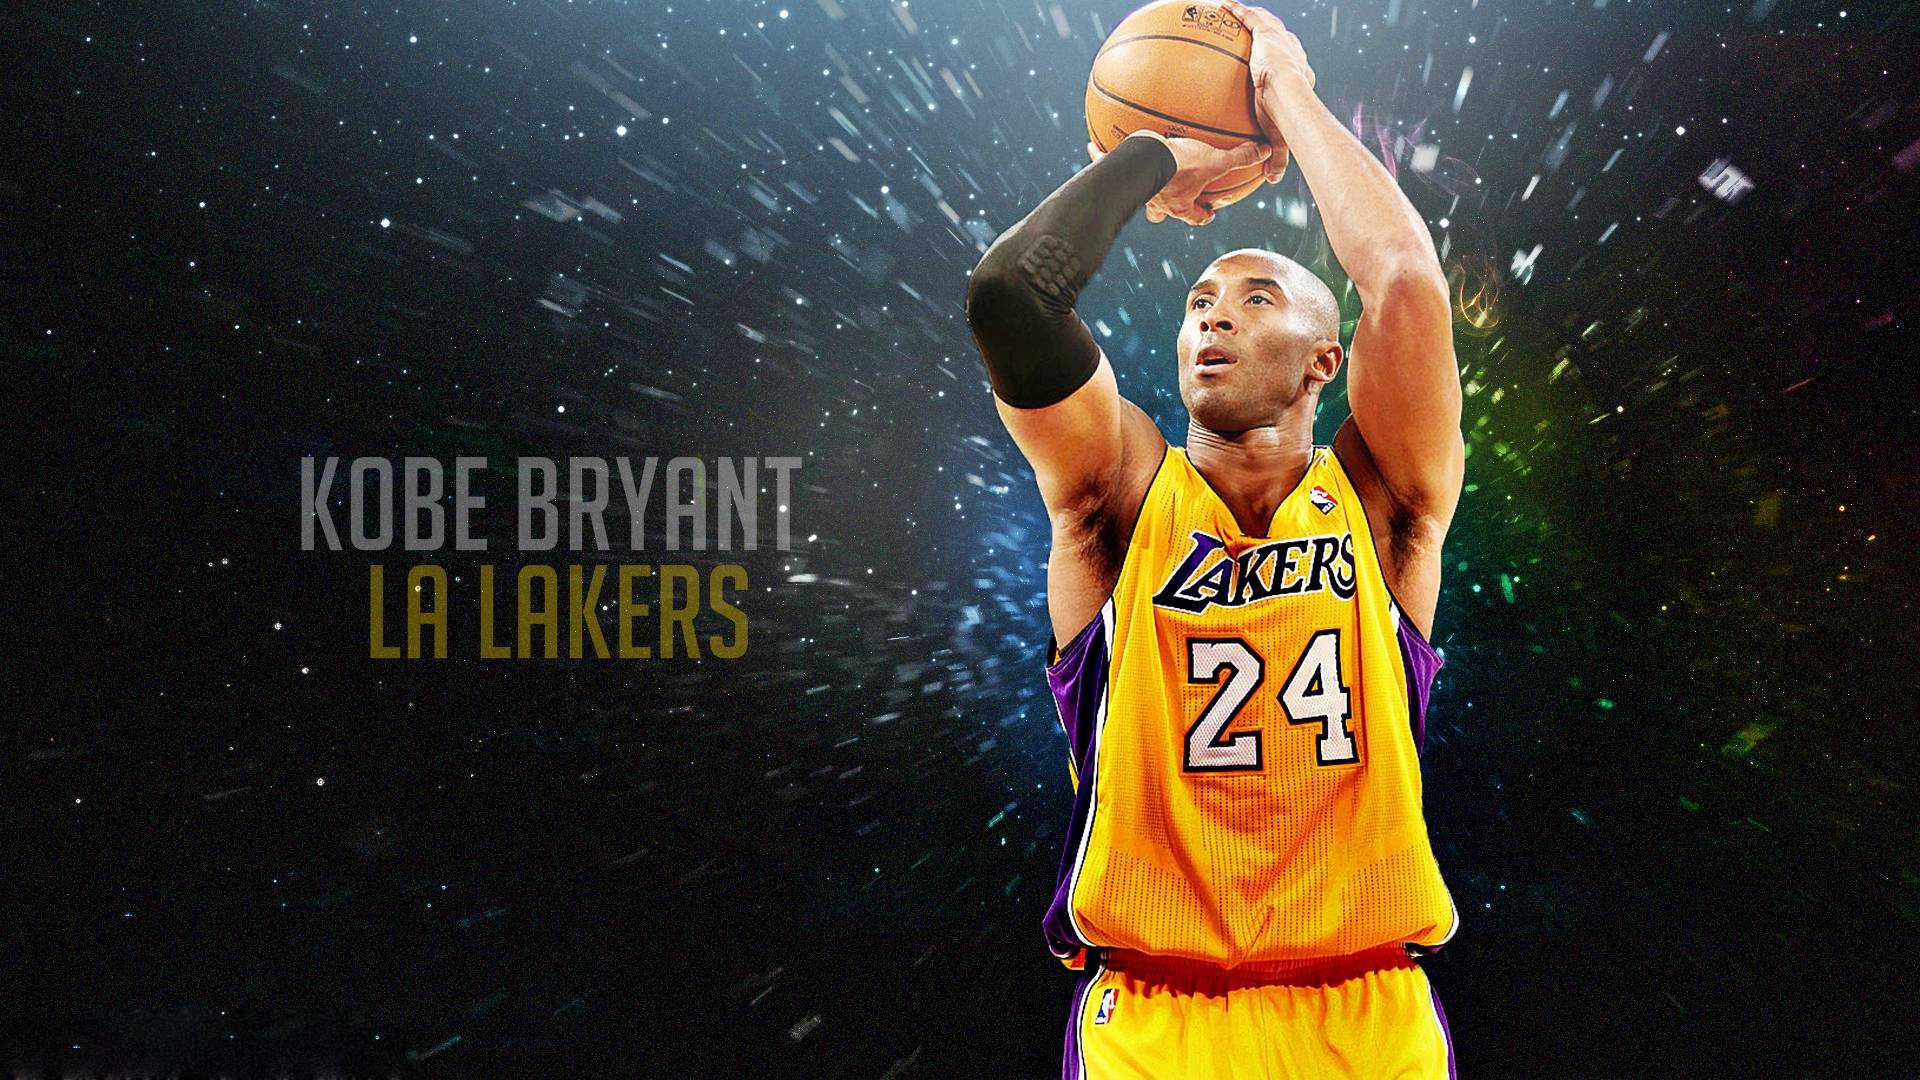 Kobe Bryant Wallpaper Basketball Widescreen For Smartphone Full HD